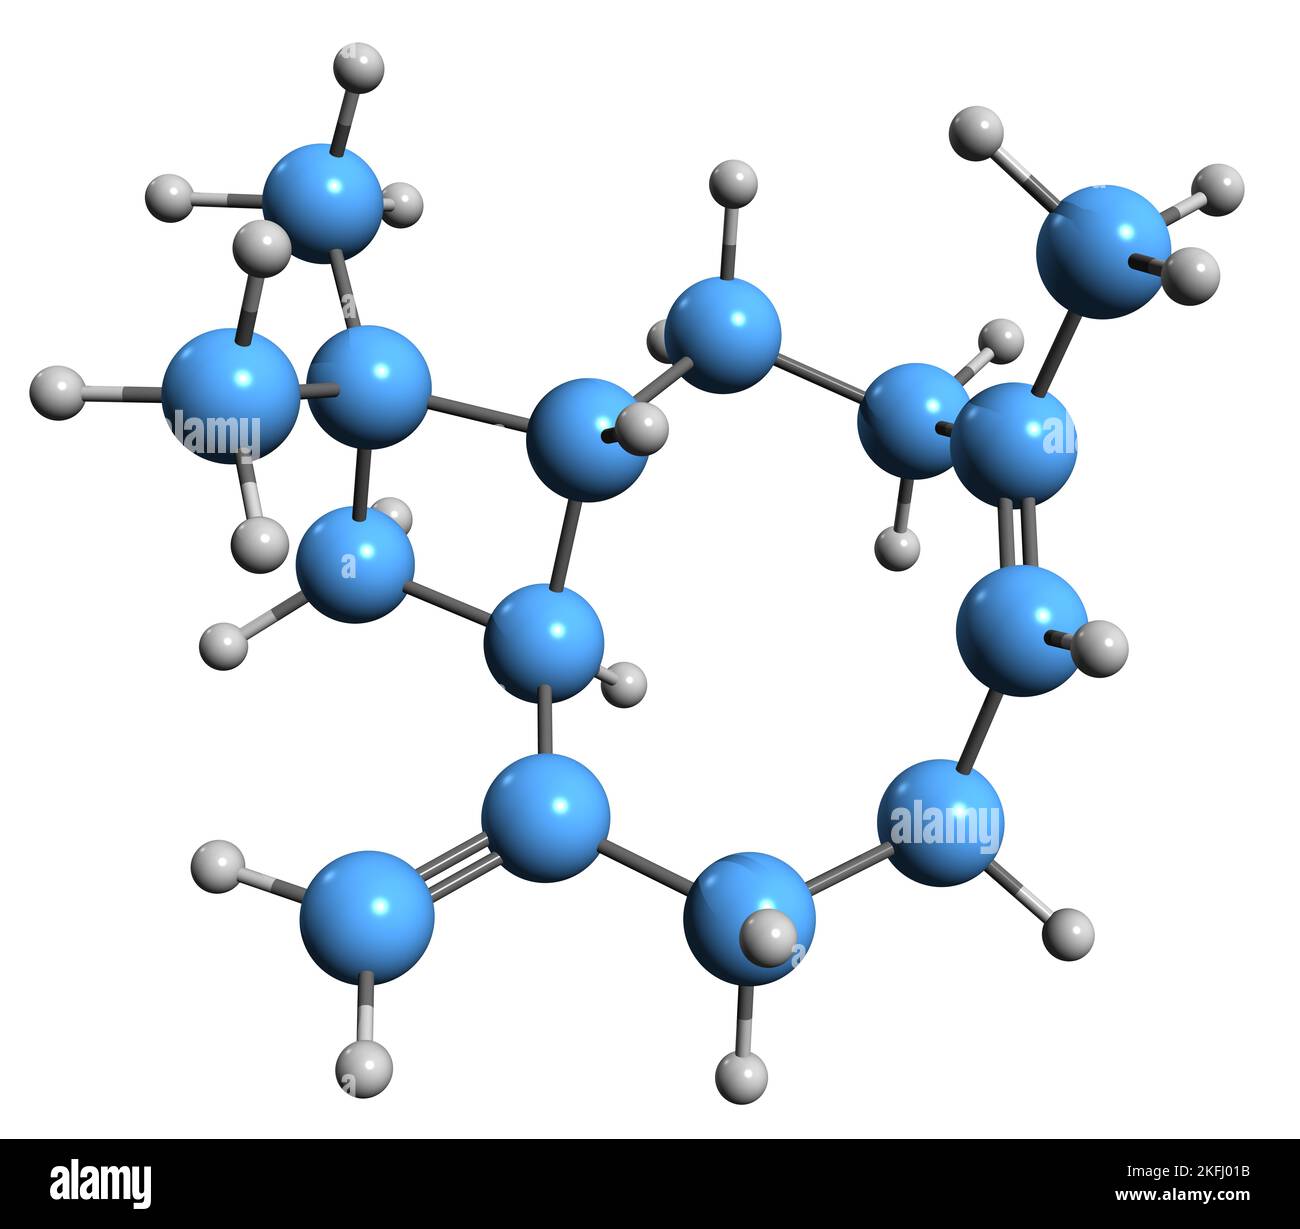 3D image of Caryophyllene skeletal formula - molecular chemical structure of   bicyclic sesquiterpene  BCP isolated on white background Stock Photo